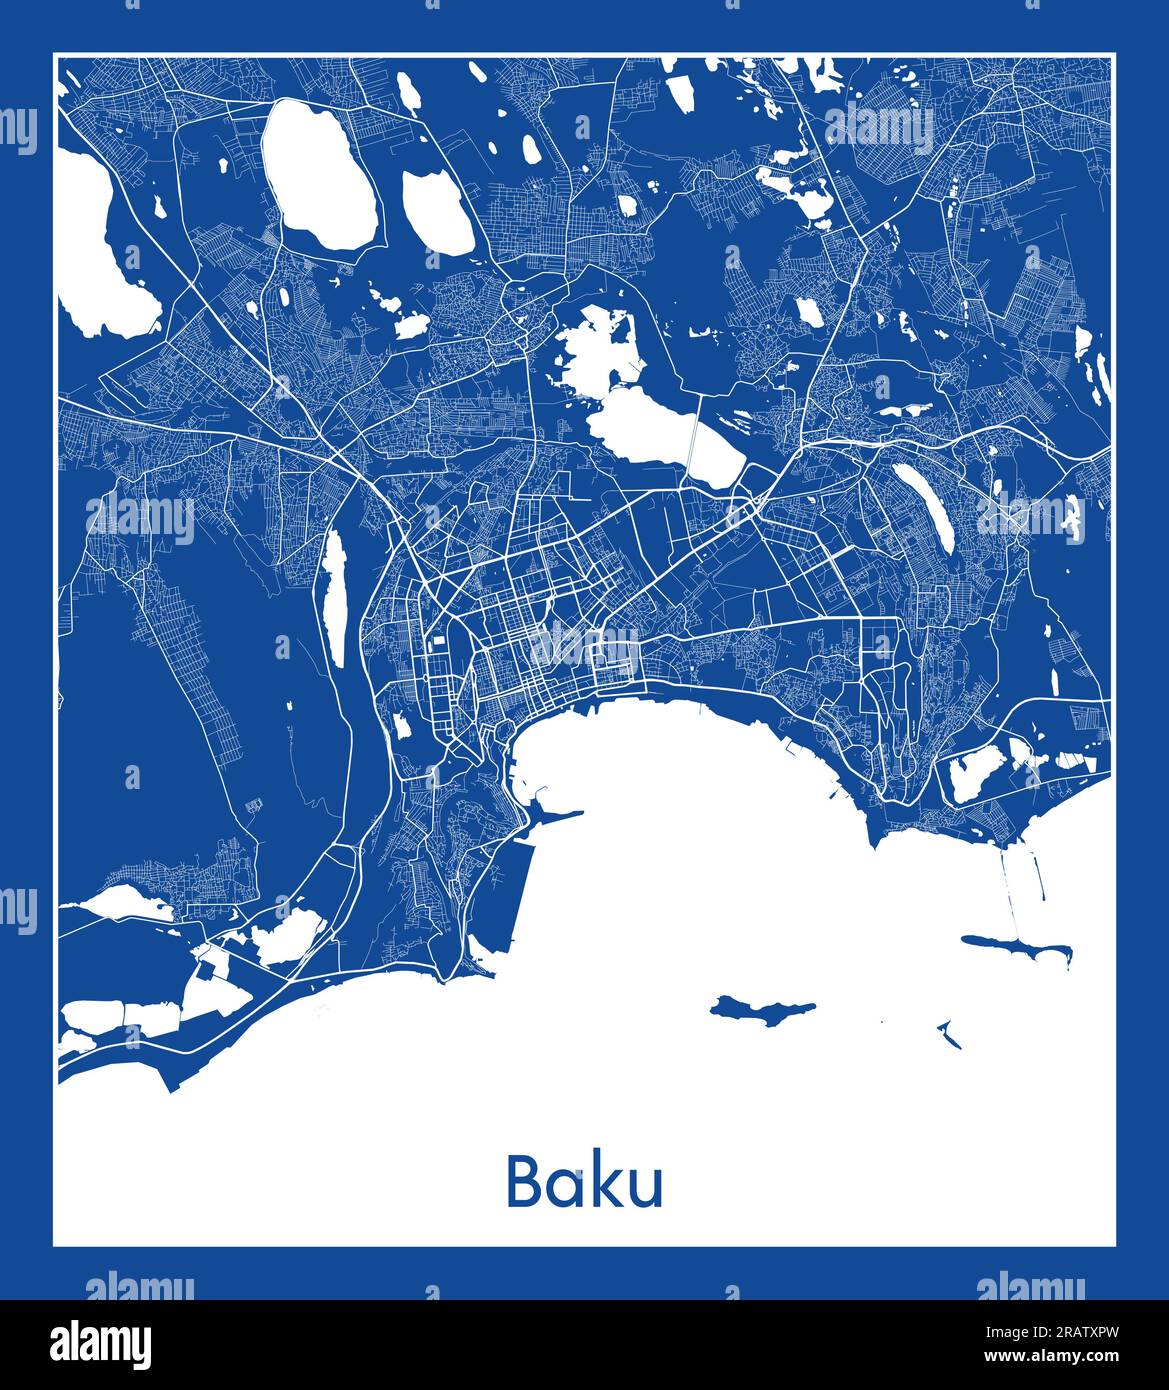 Baku Aserbaidschan Asien Stadtplan blau bedruckte Vektordarstellung Stock Vektor